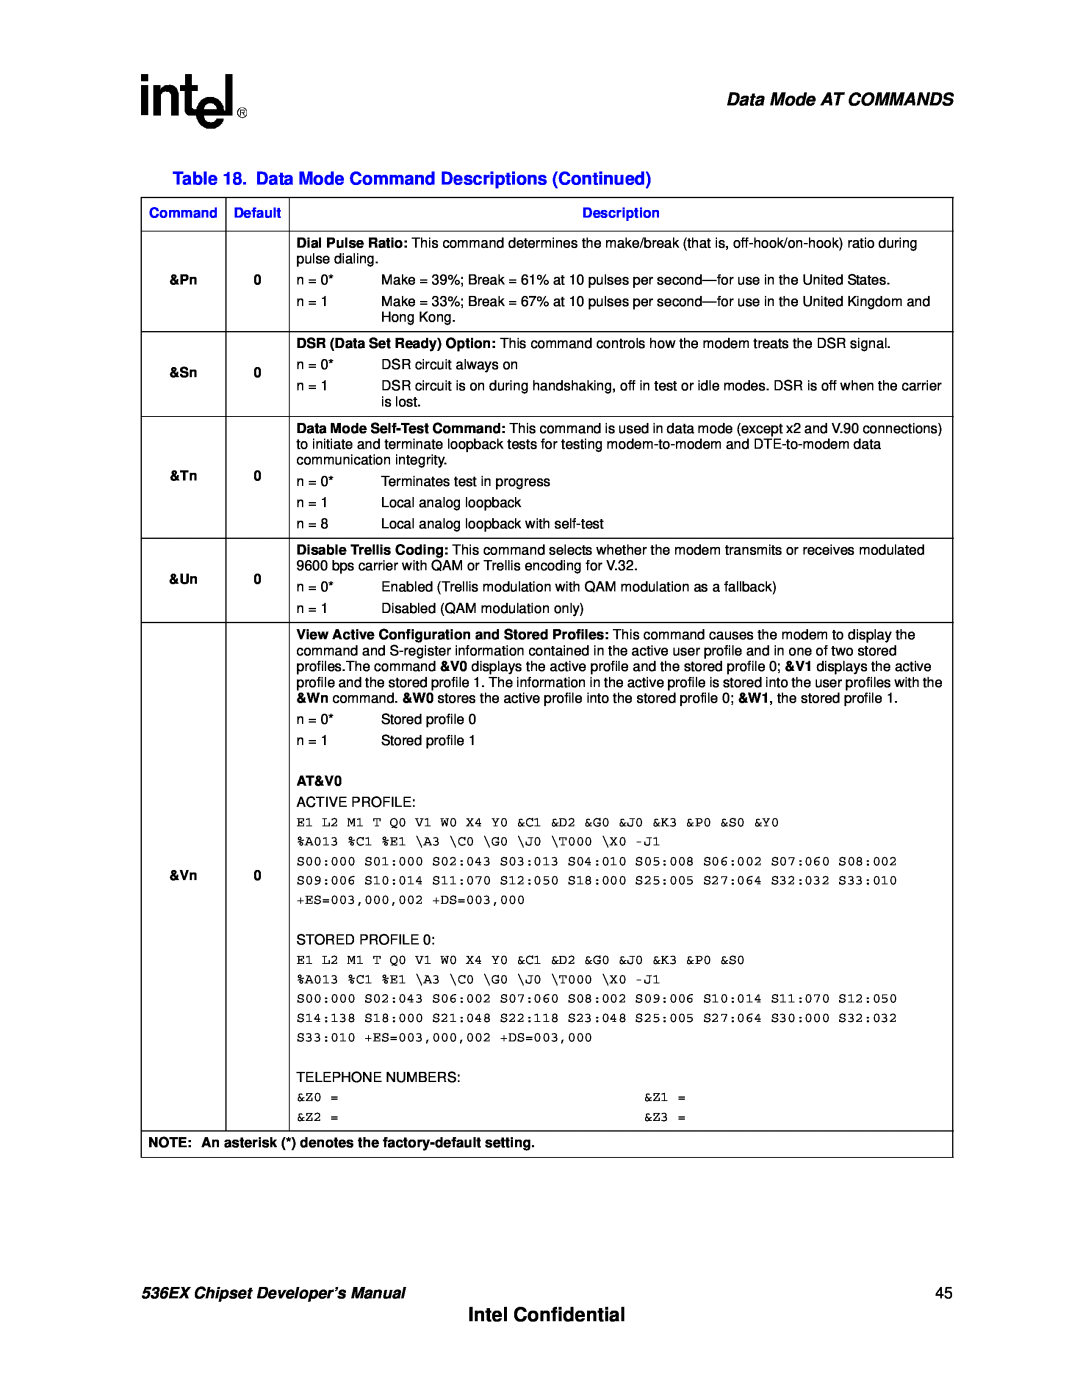 Intel 537EX manual Intel Confidential, Data Mode AT COMMANDS, 536EX Chipset Developer’s Manual, AT&V0 